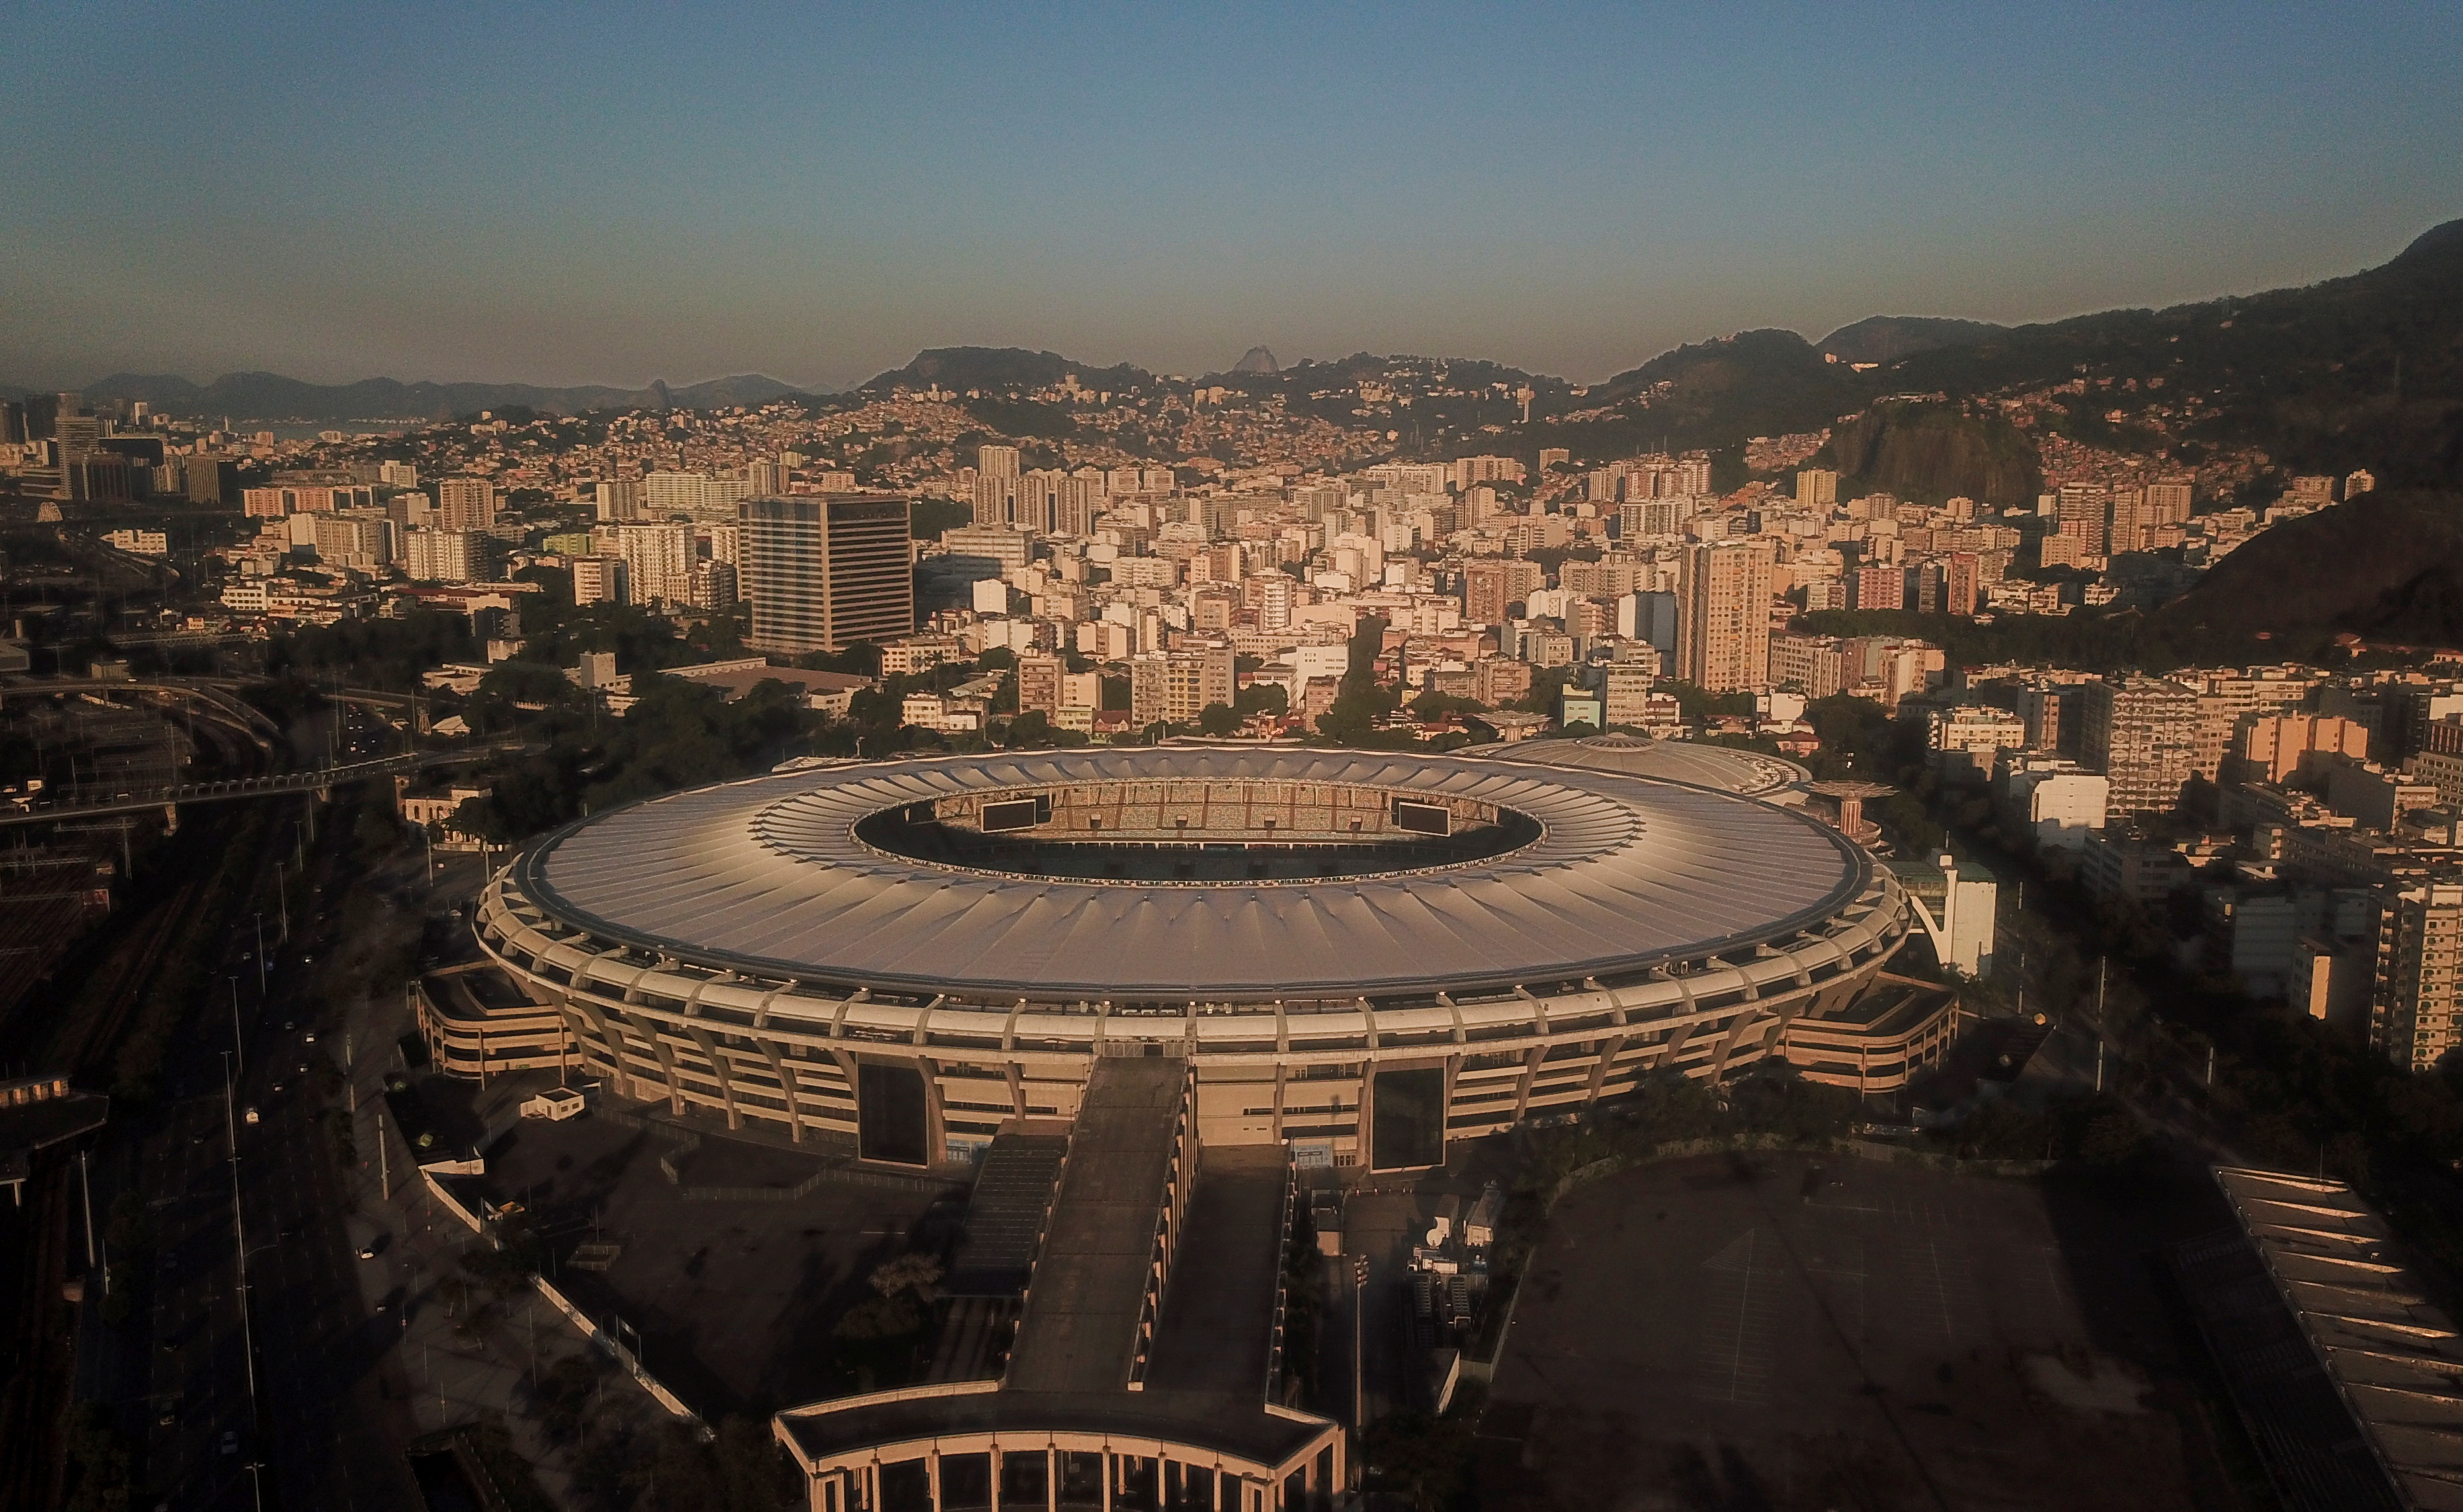 A general view of the Maracana Stadium in Rio de Janeiro